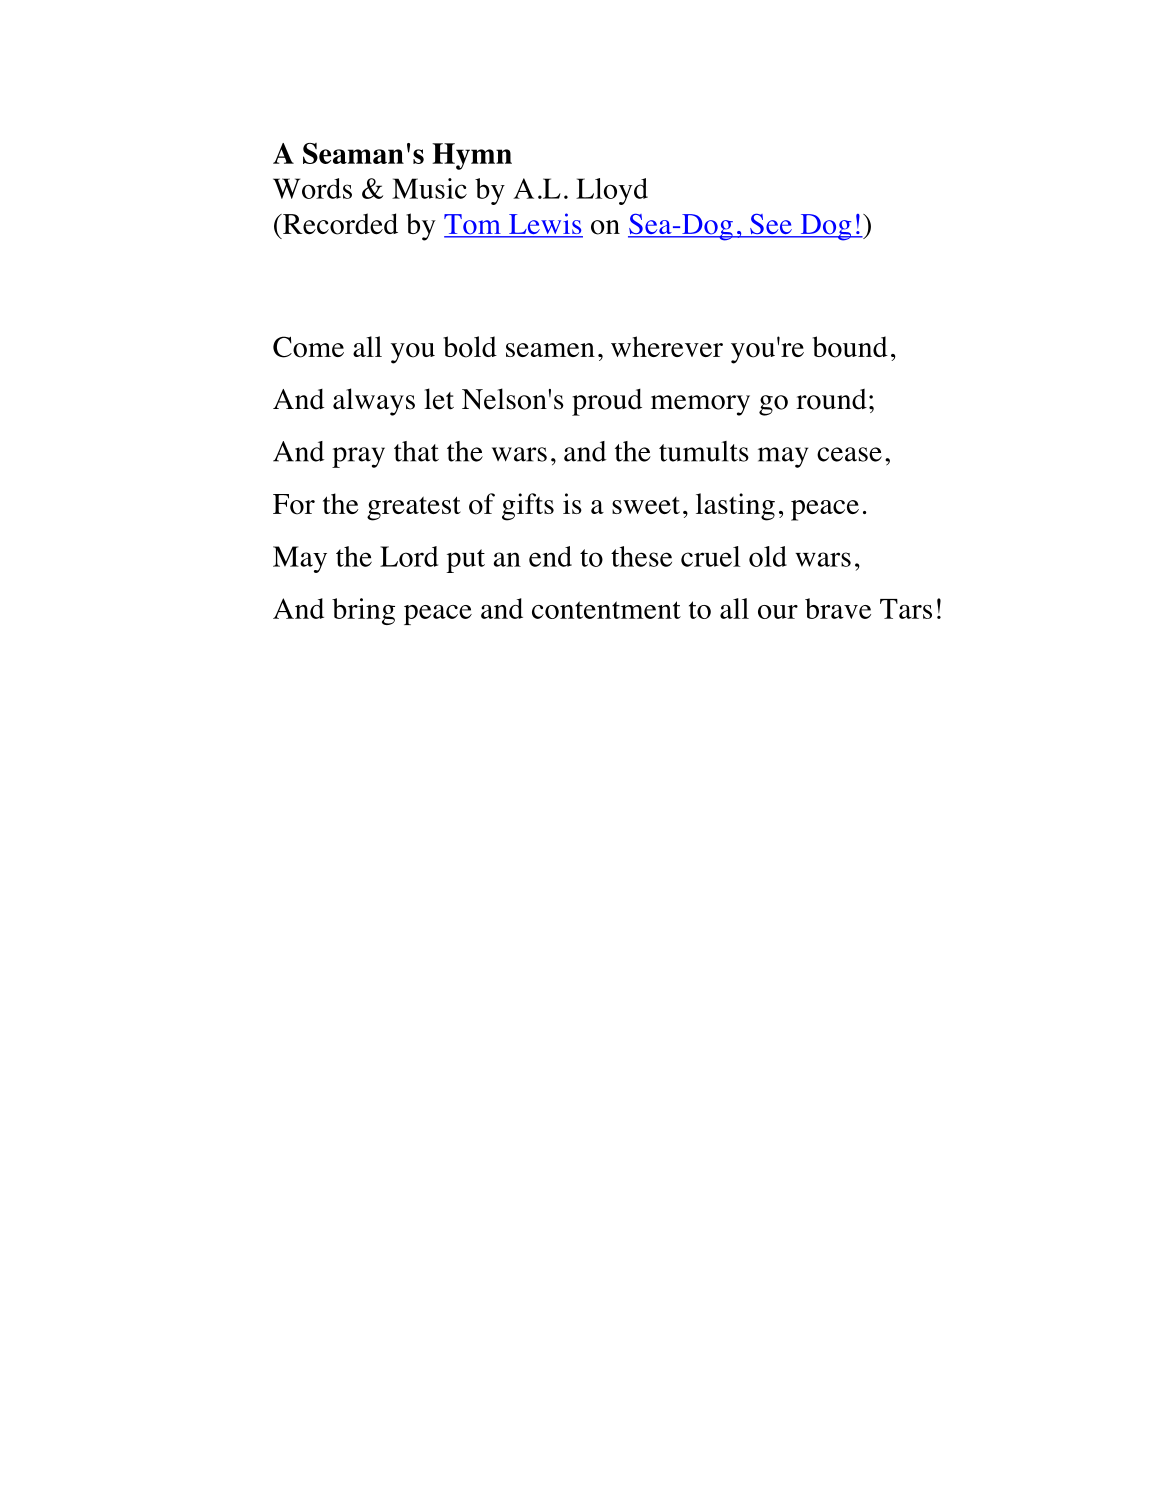 Seaman's Prayer page 1